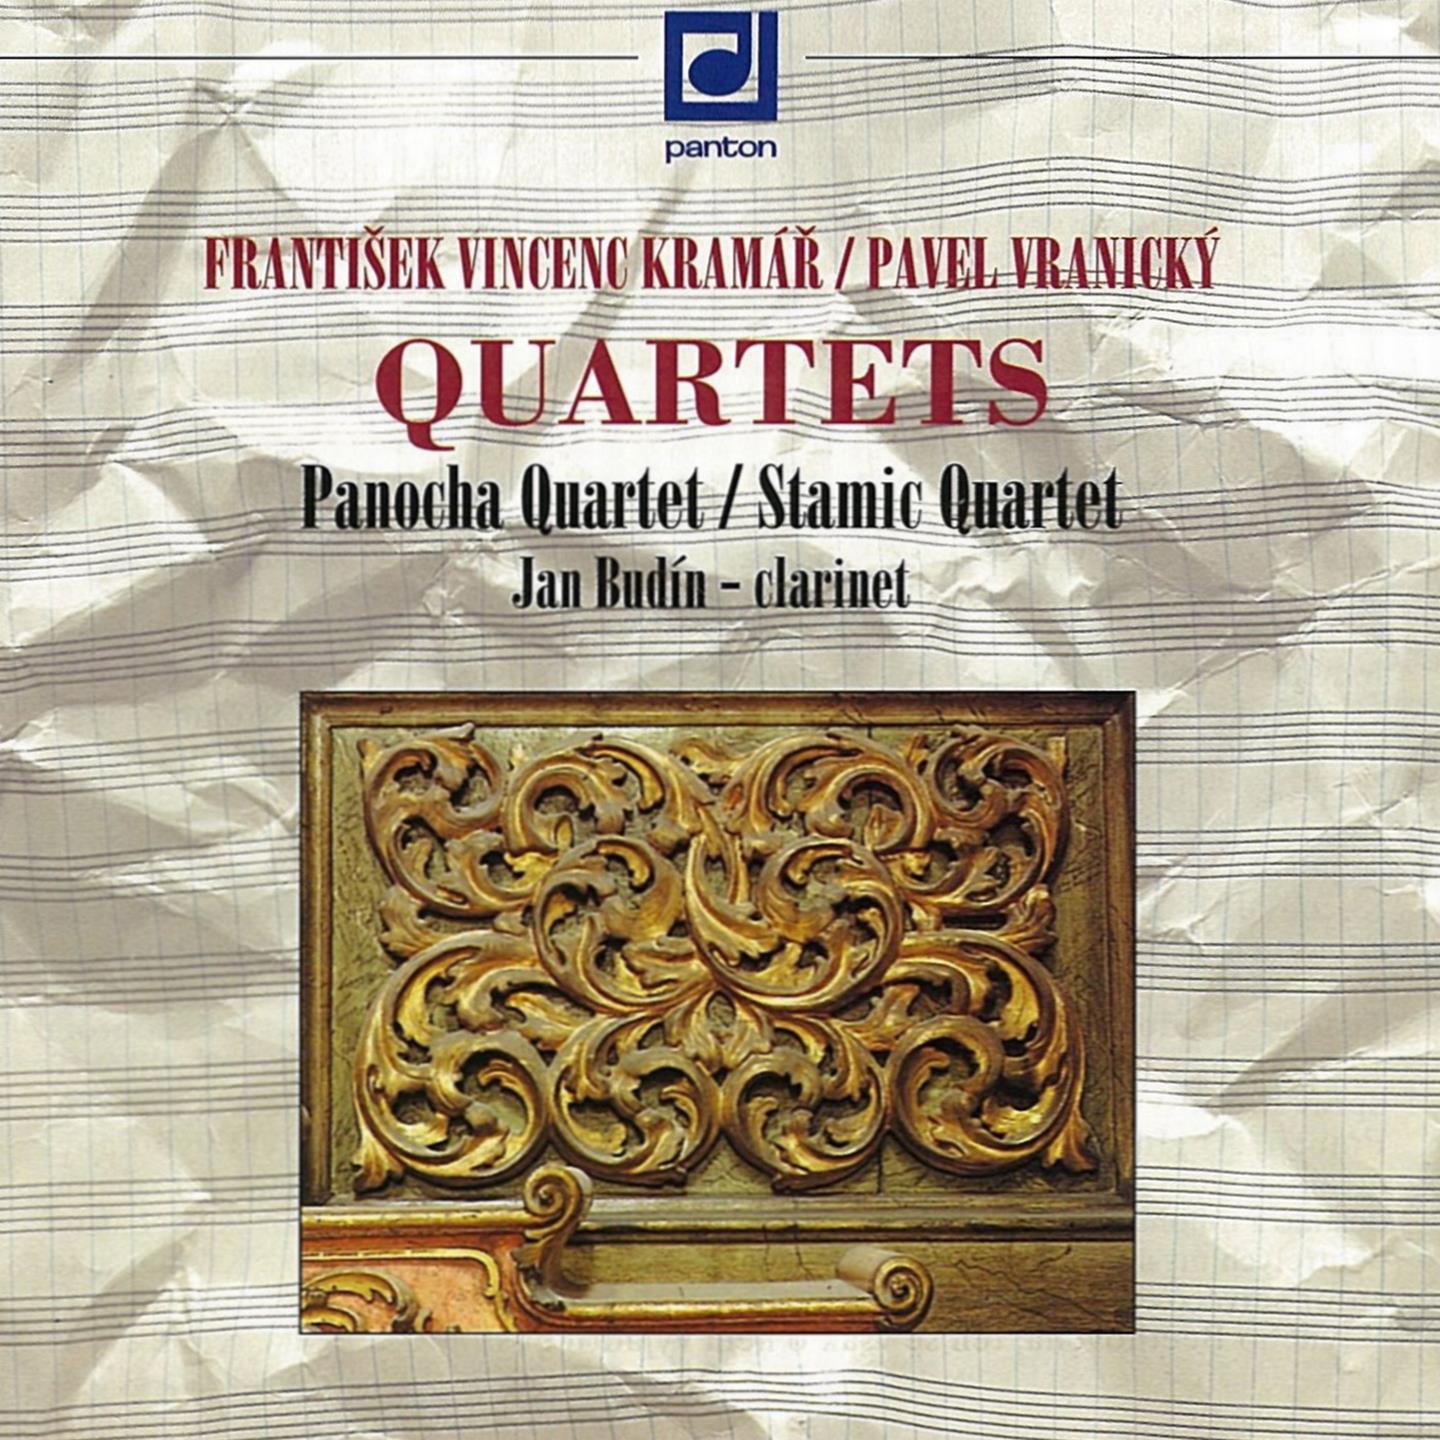 Clarinet Quartets, Op. 21, No. 1 in B-Flat Major, Op. 21: II. Romanza